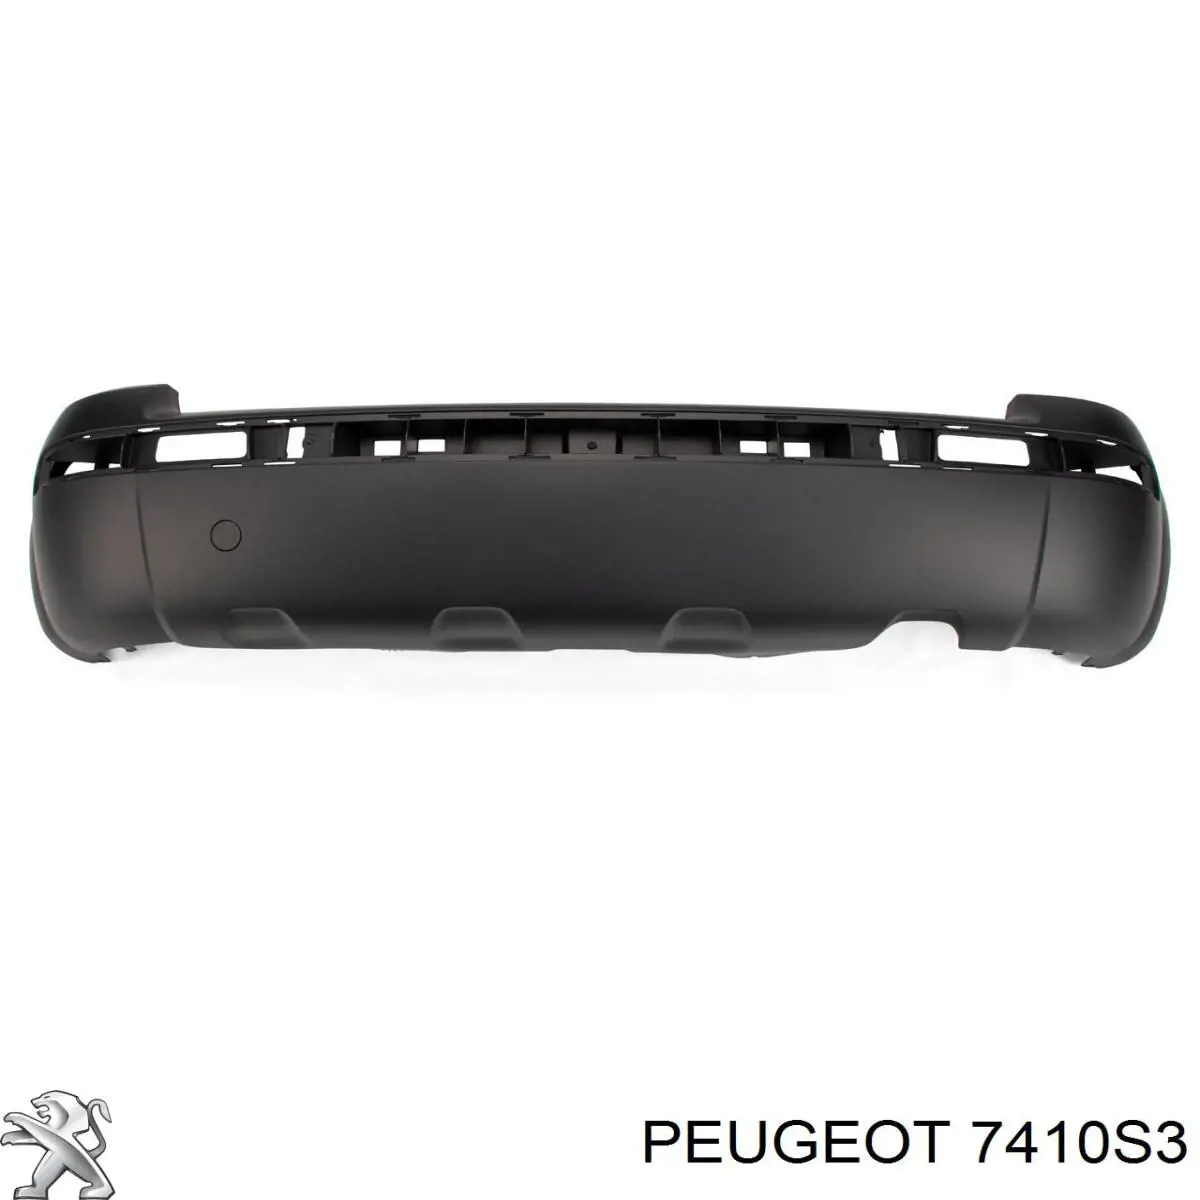 7410S3 Peugeot/Citroen parachoques trasero